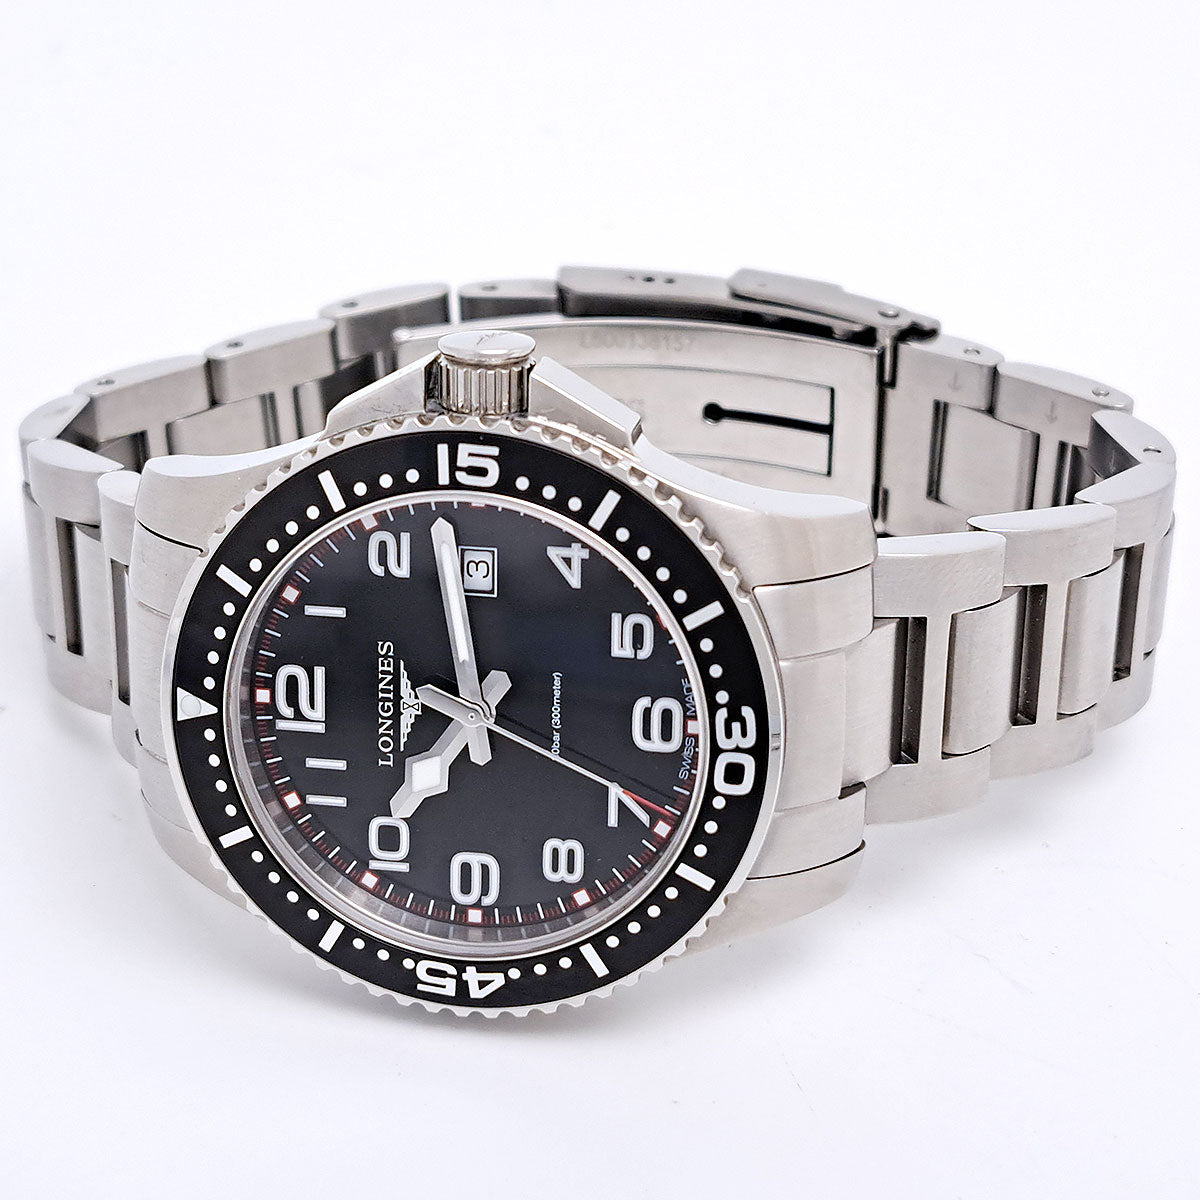 Quartz HydroConquest Wrist Watch L3.688.4